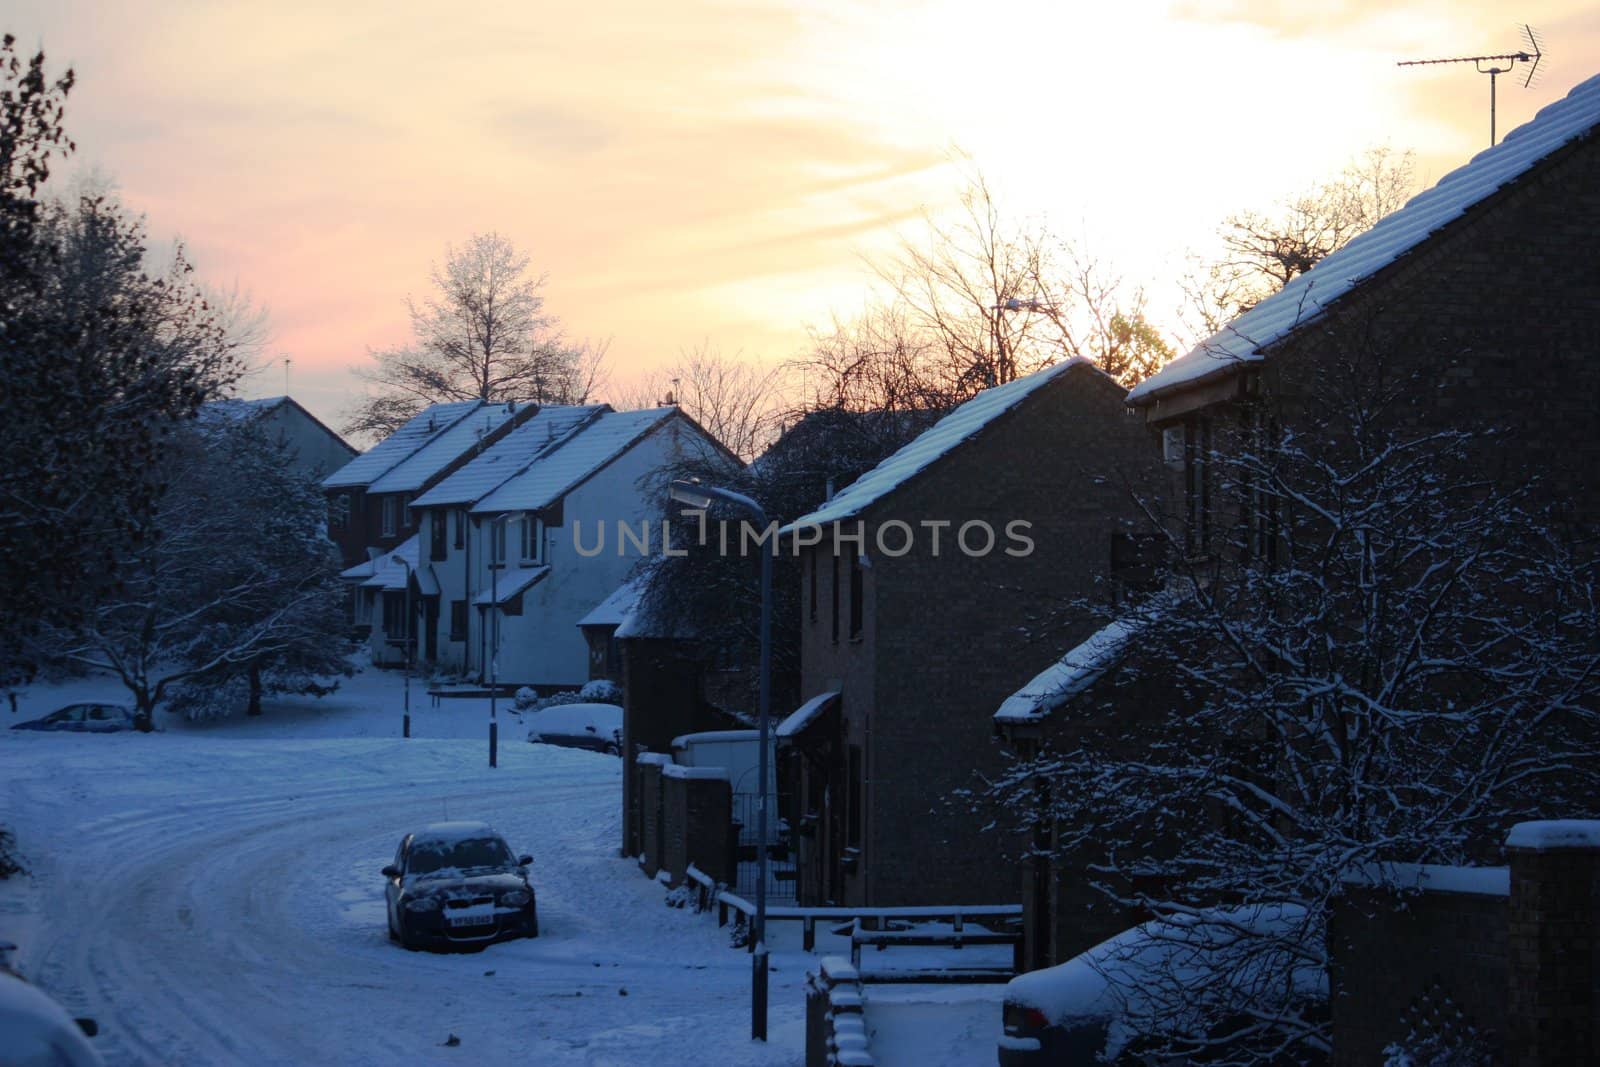 Sunset over a snowy street by chrisga